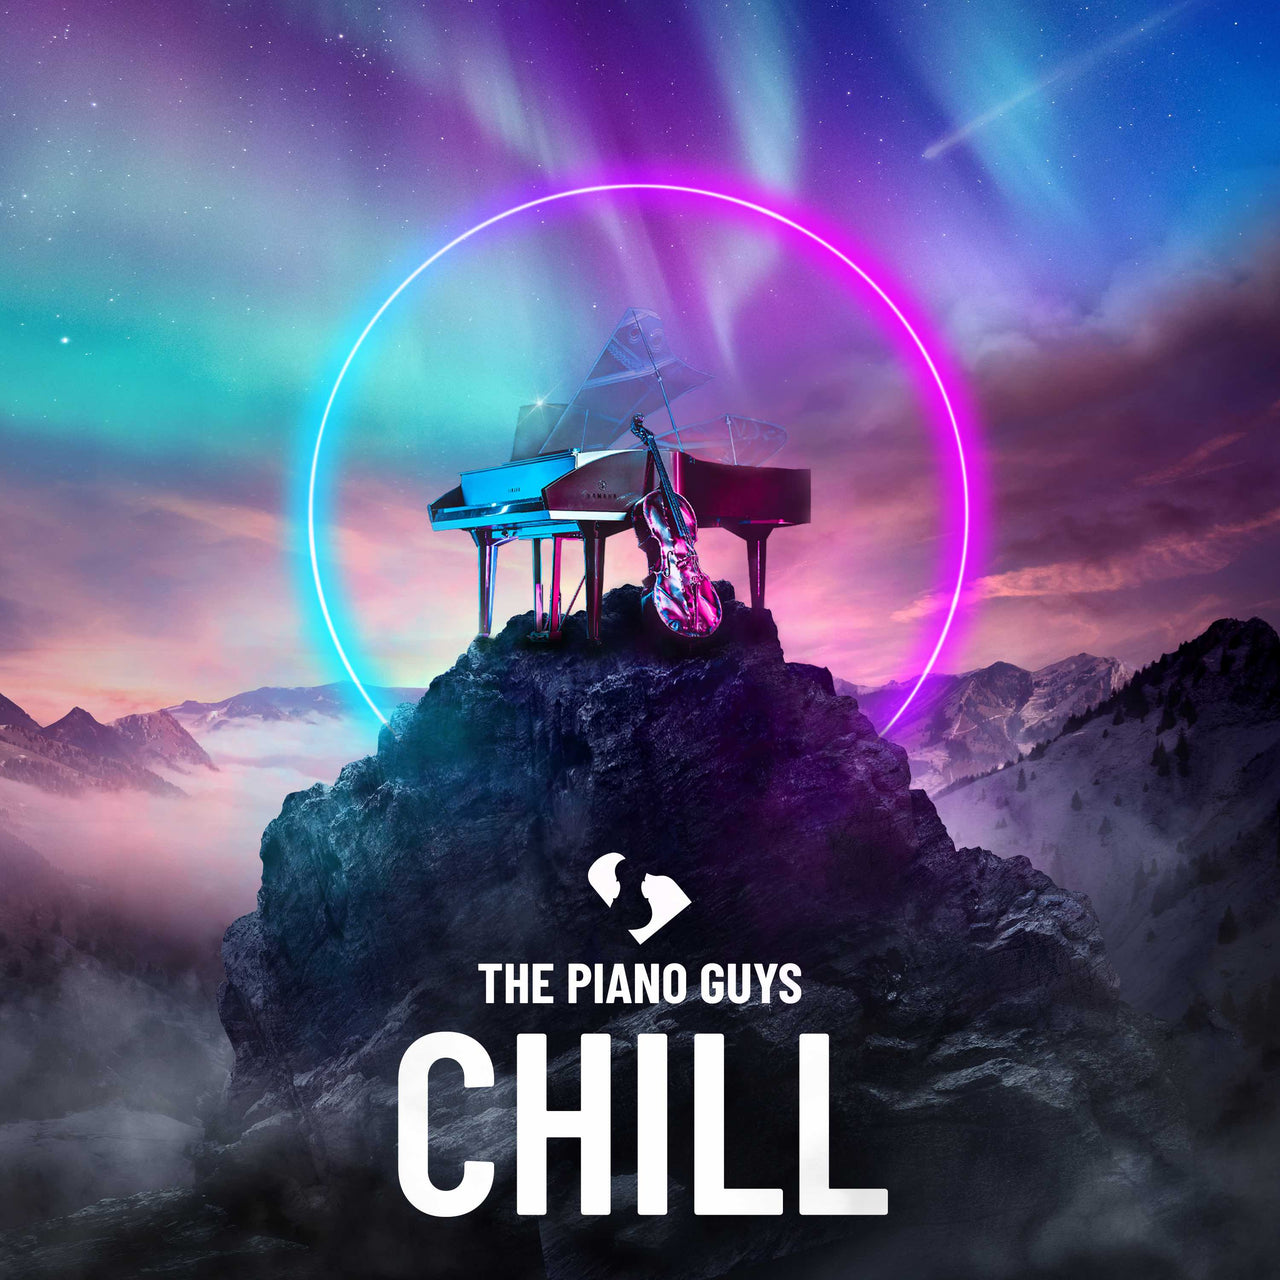 The Piano Guys "CHILL"